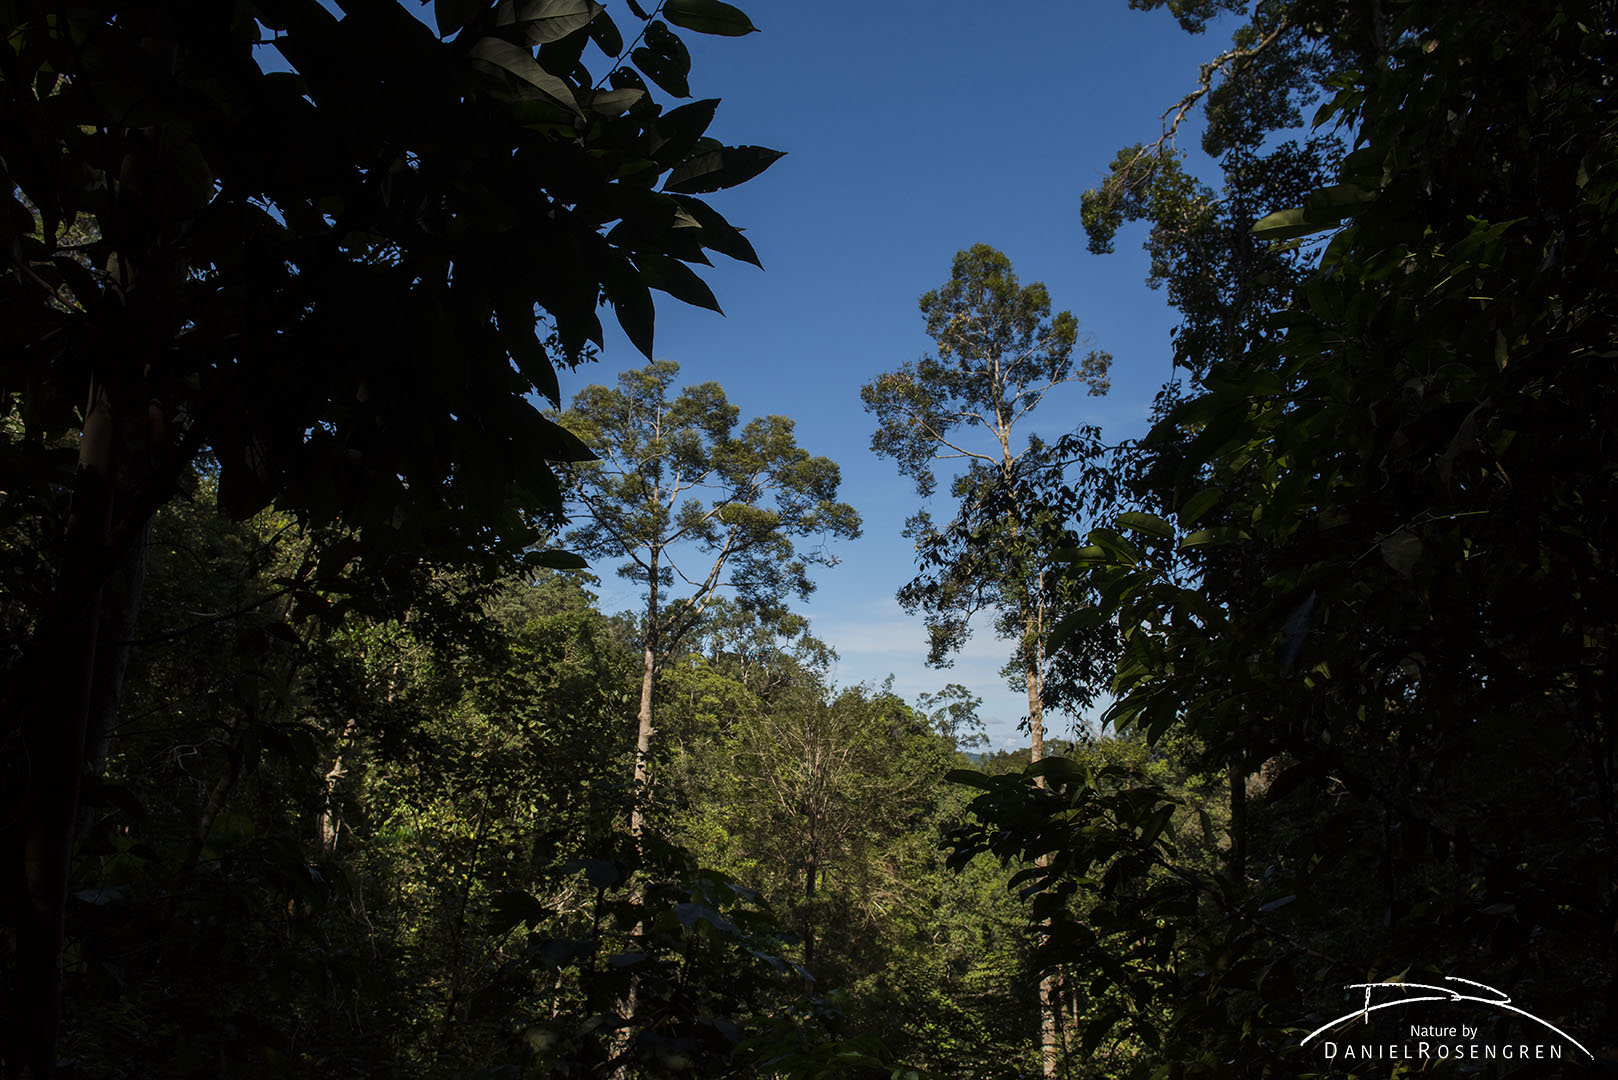 The rainforests of Bukit Tigapuluh, Sumatra. © Daniel Rosengren